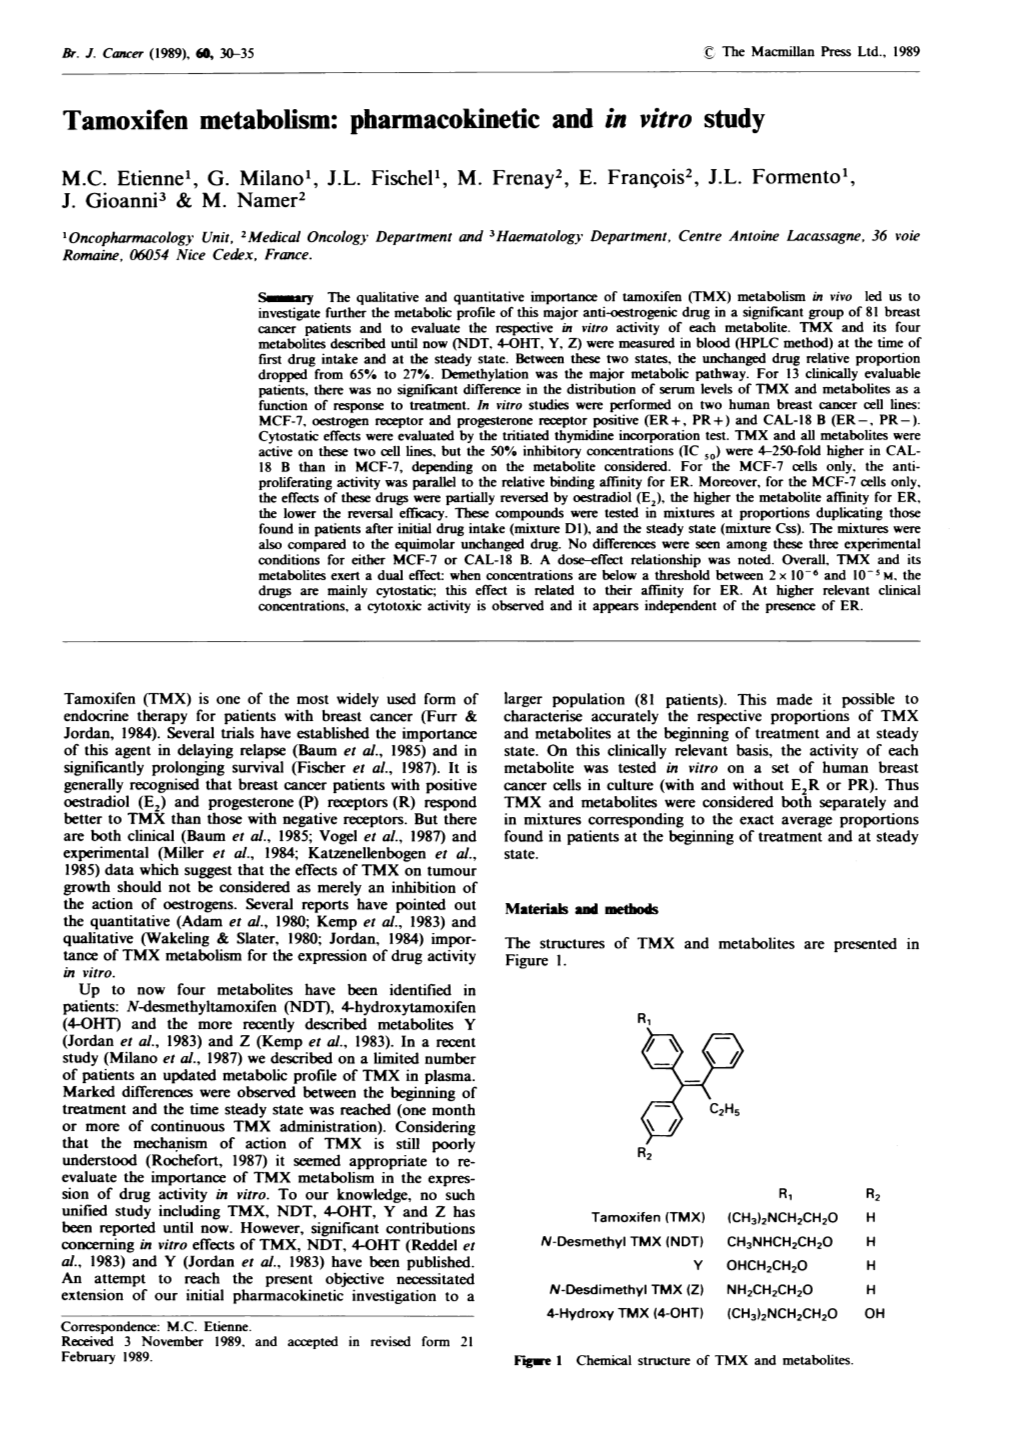 Tamoxifen Metabolism: Pharmacokinetic and in Vitro Study